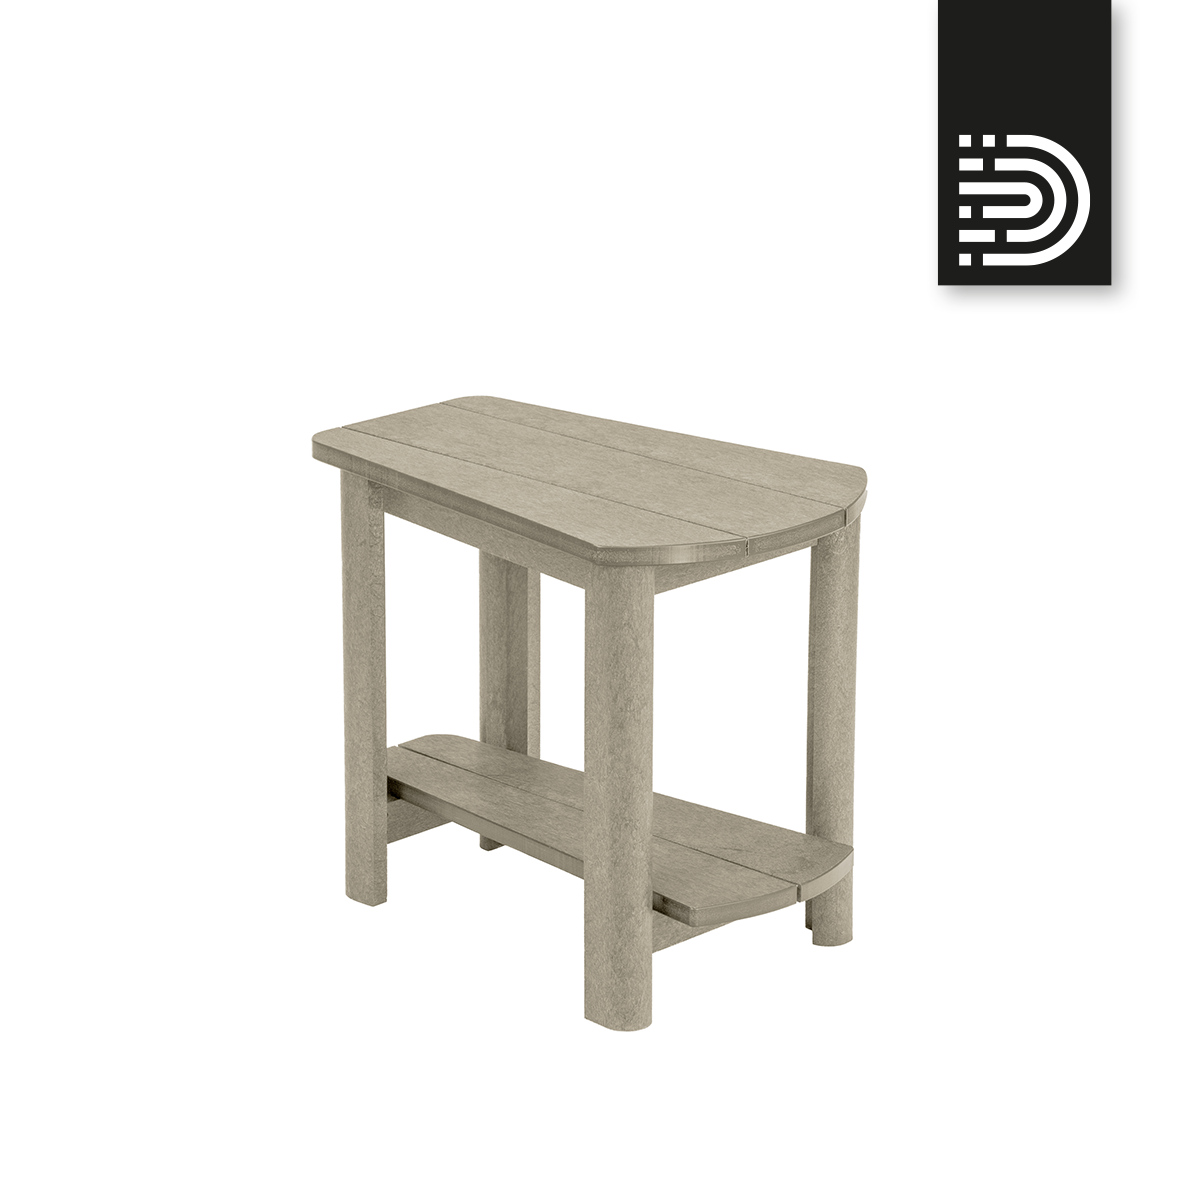 T04 Addy Side Table - beige 07